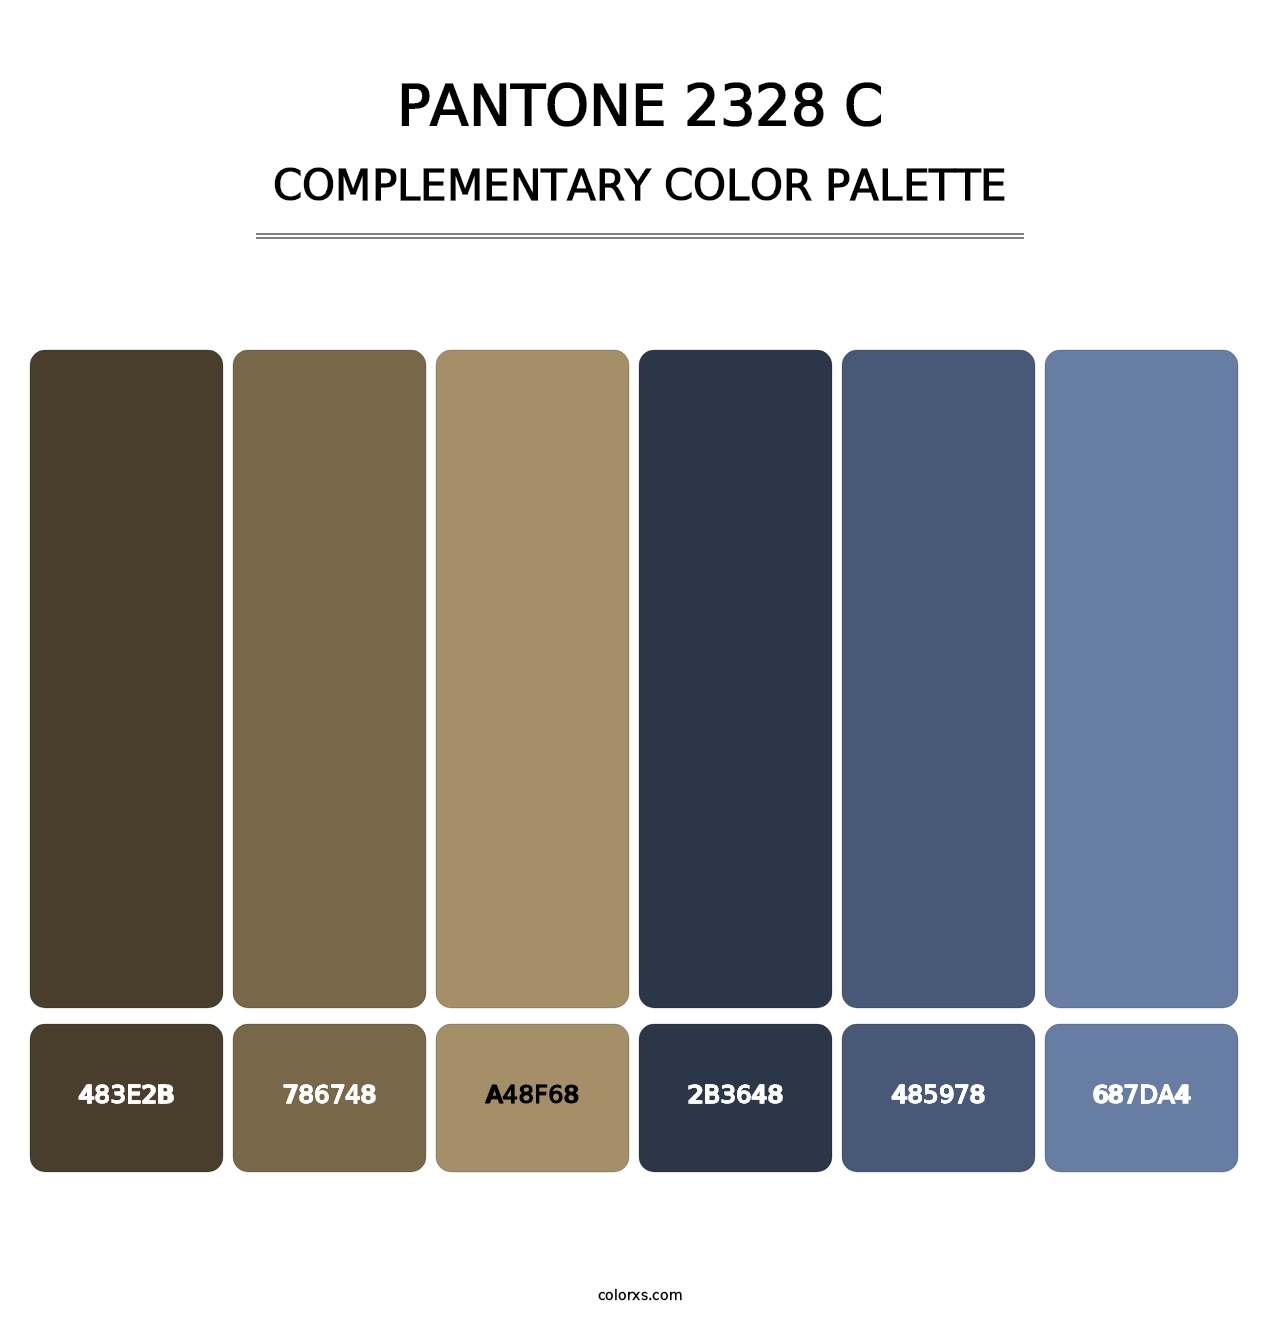 PANTONE 2328 C - Complementary Color Palette